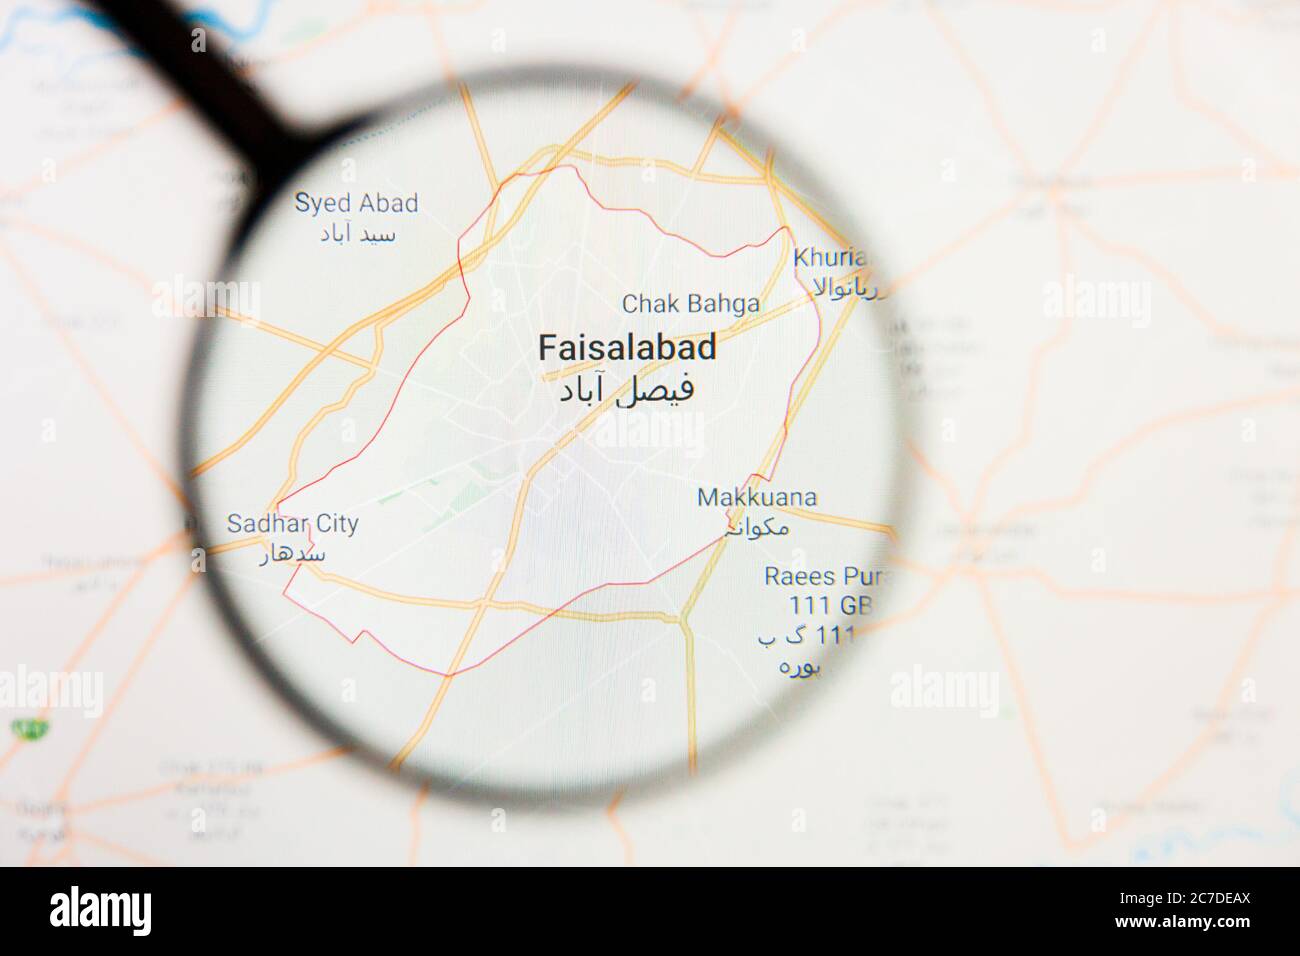 Faisalabad, Pakistan city visualization illustrative concept on display screen through magnifying glass Stock Photo